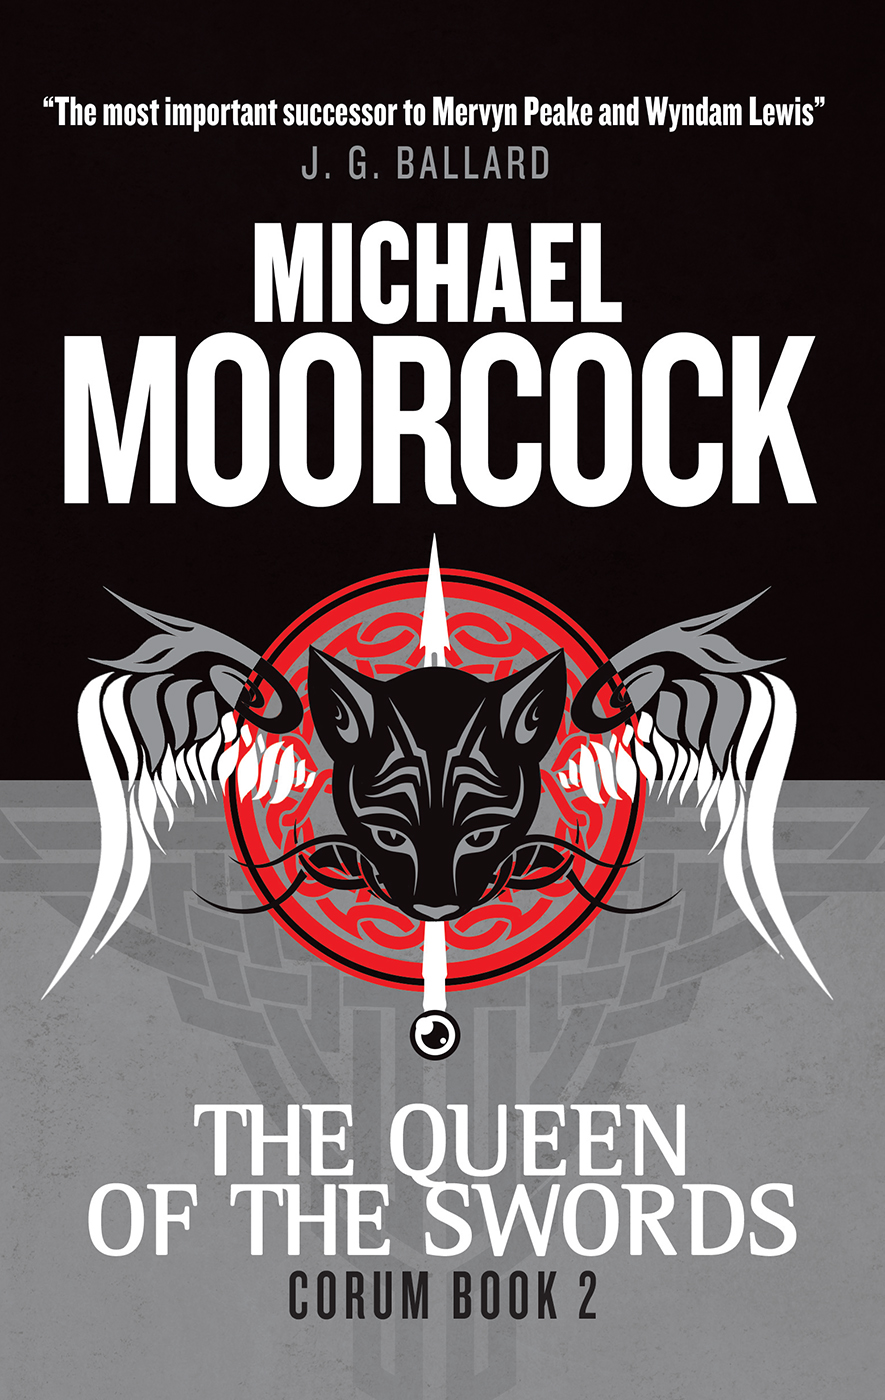 The Queen of Swords by Michael Moorcock